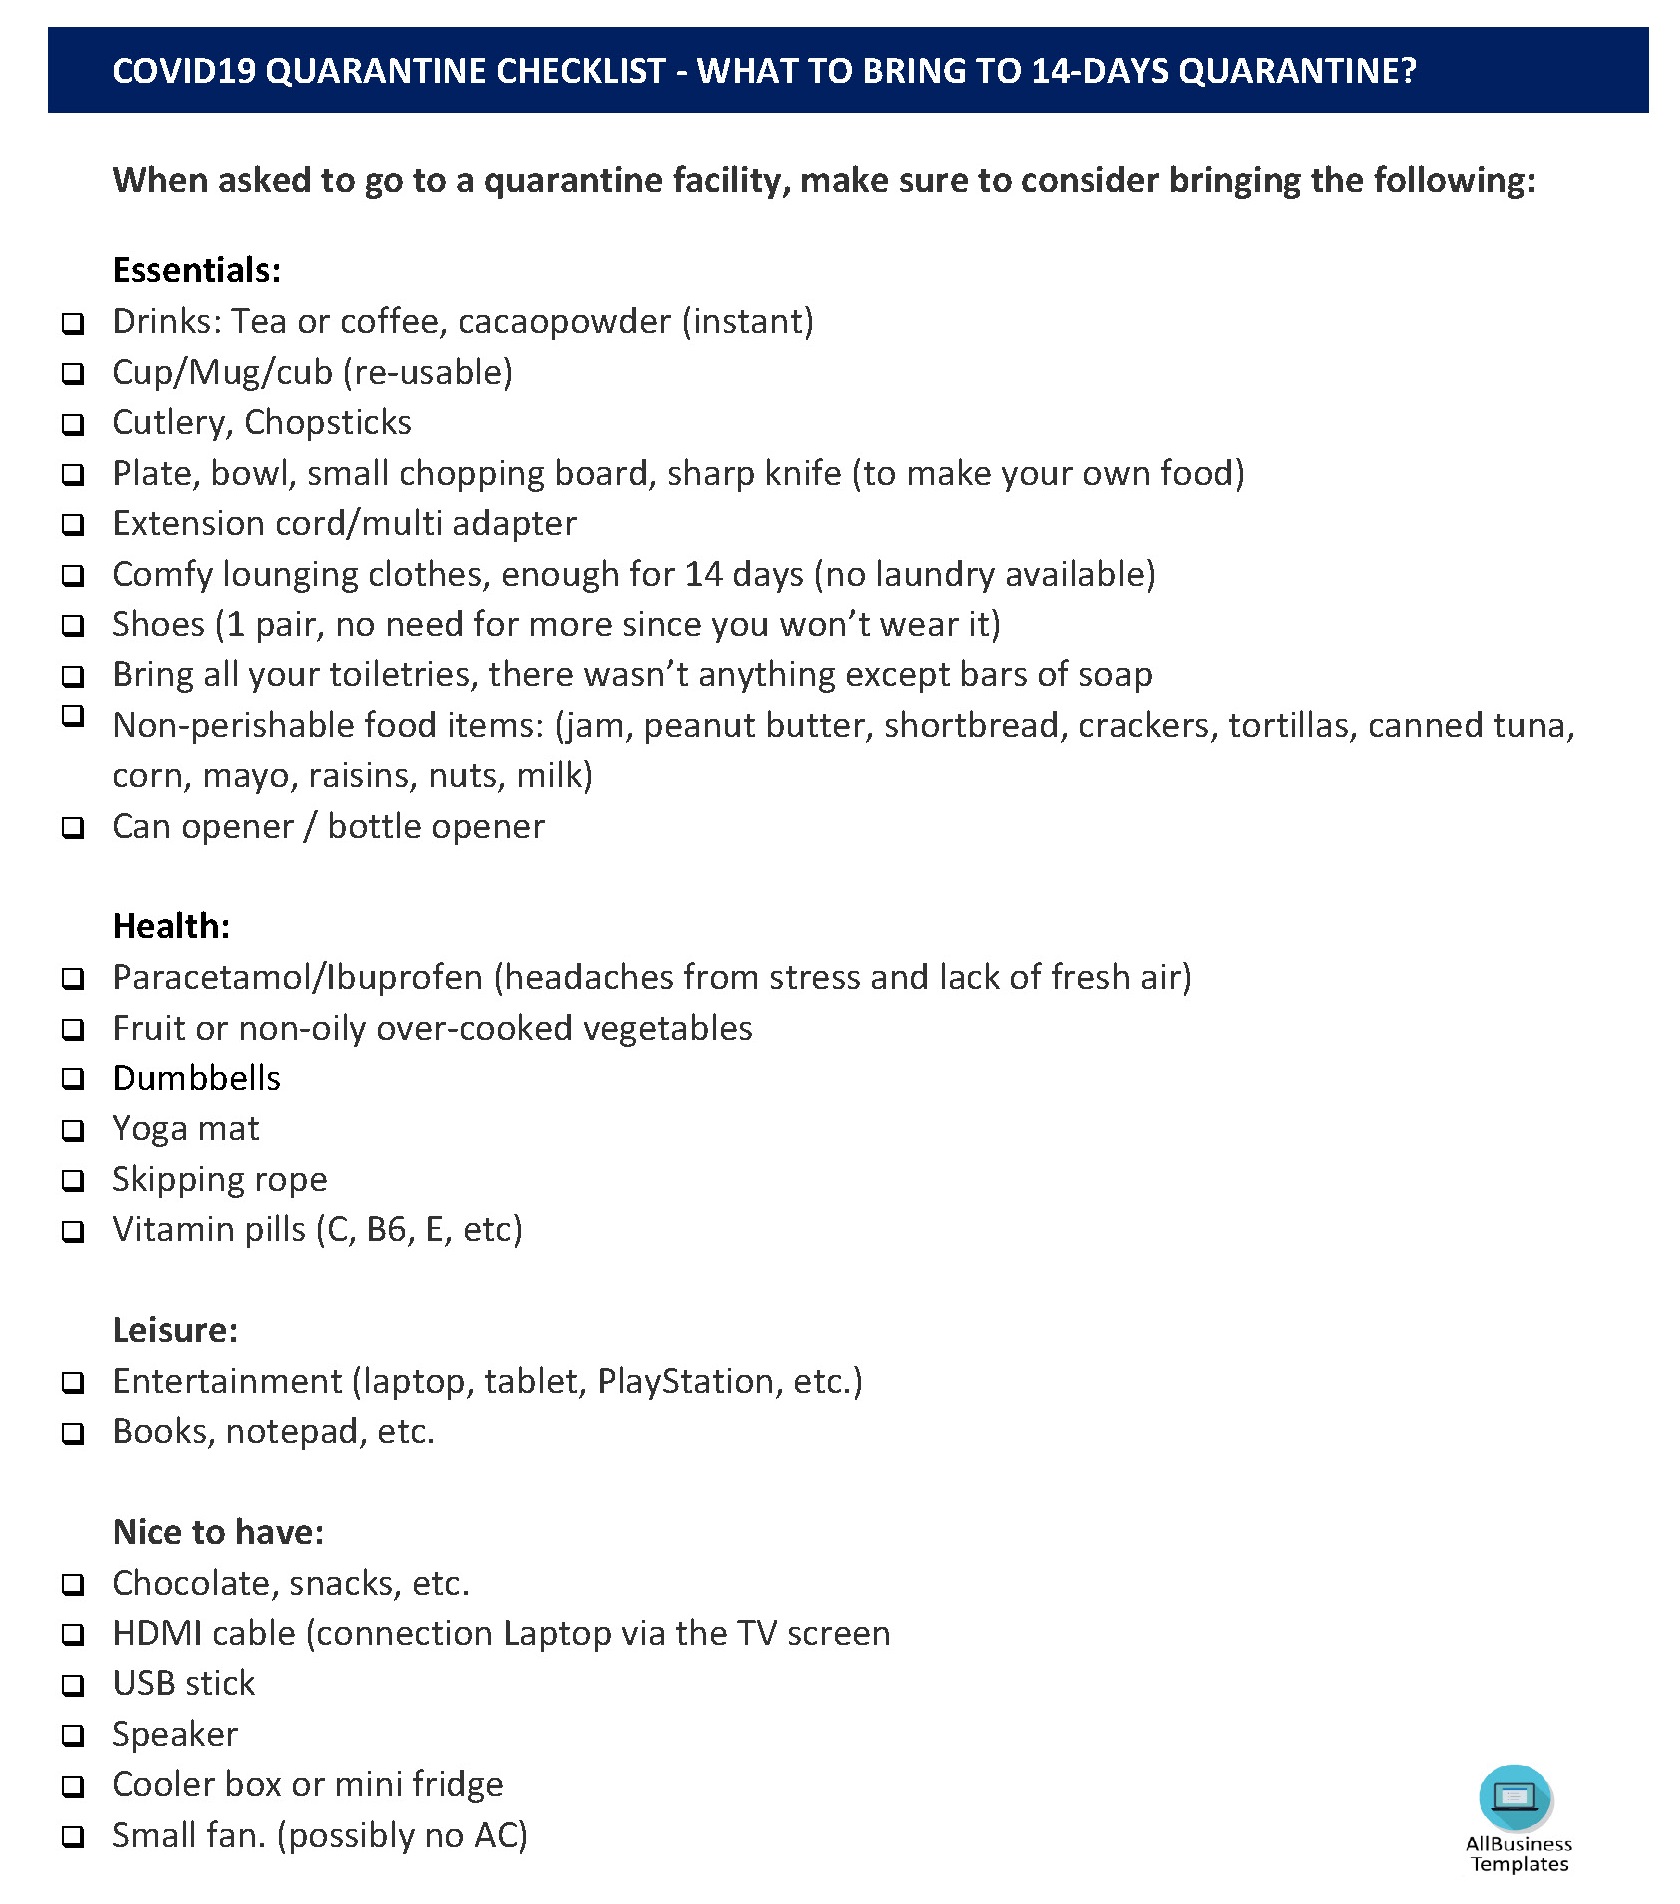 COVID-19 Quarantine checklist main image